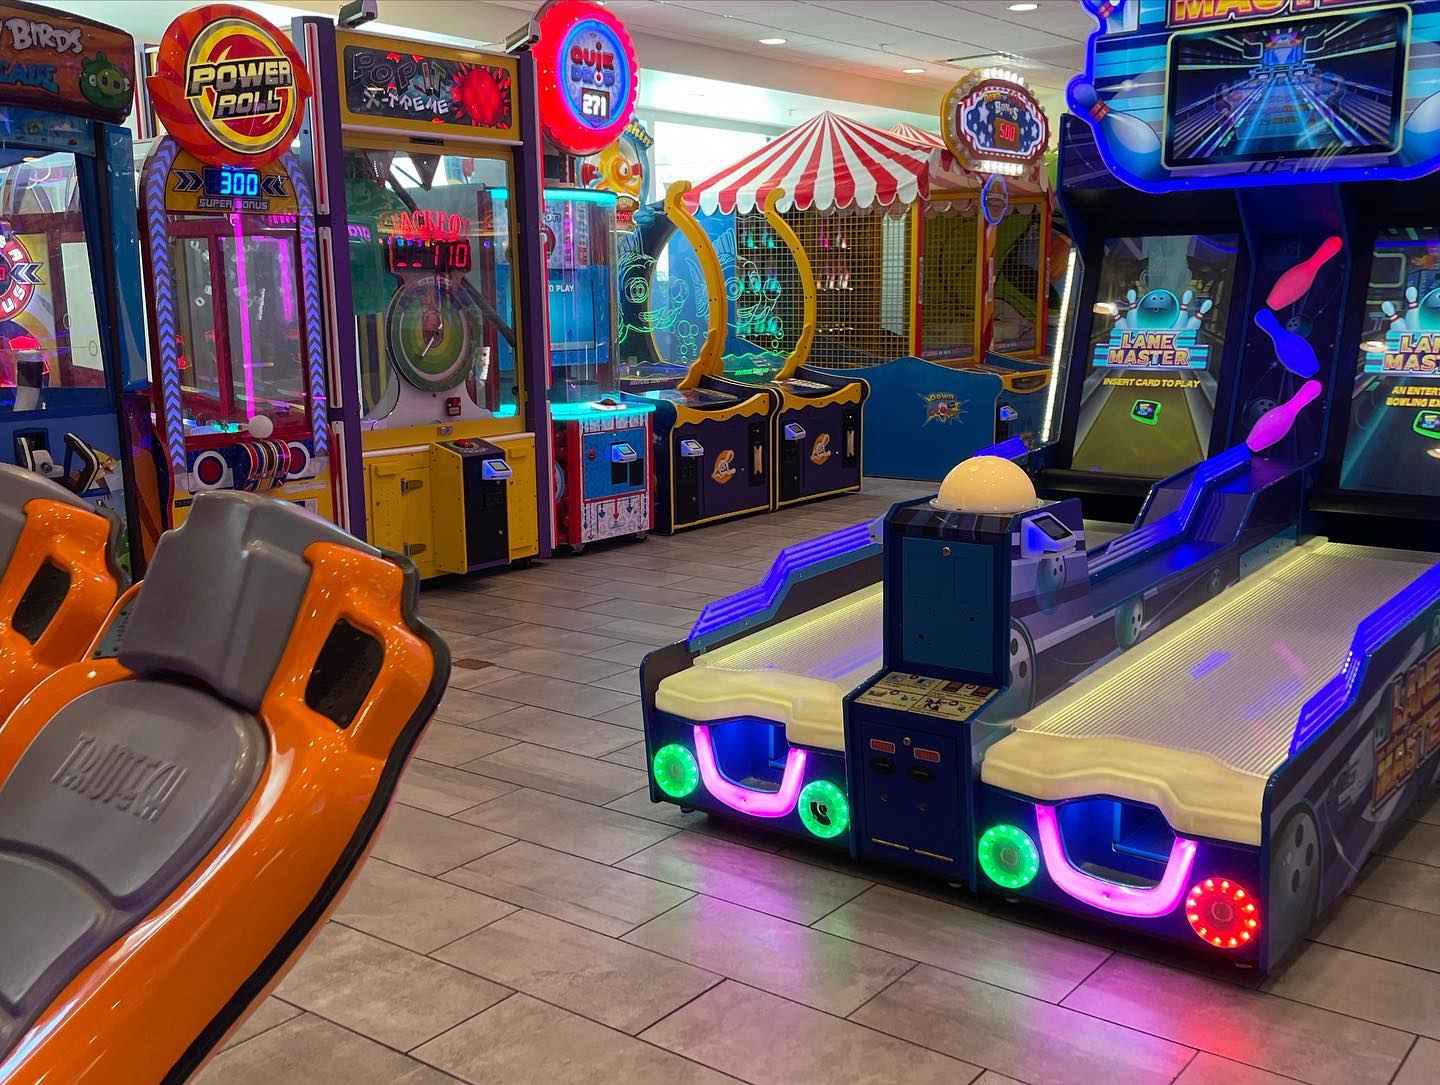 Arcade at Orlando's Largest McDonald's